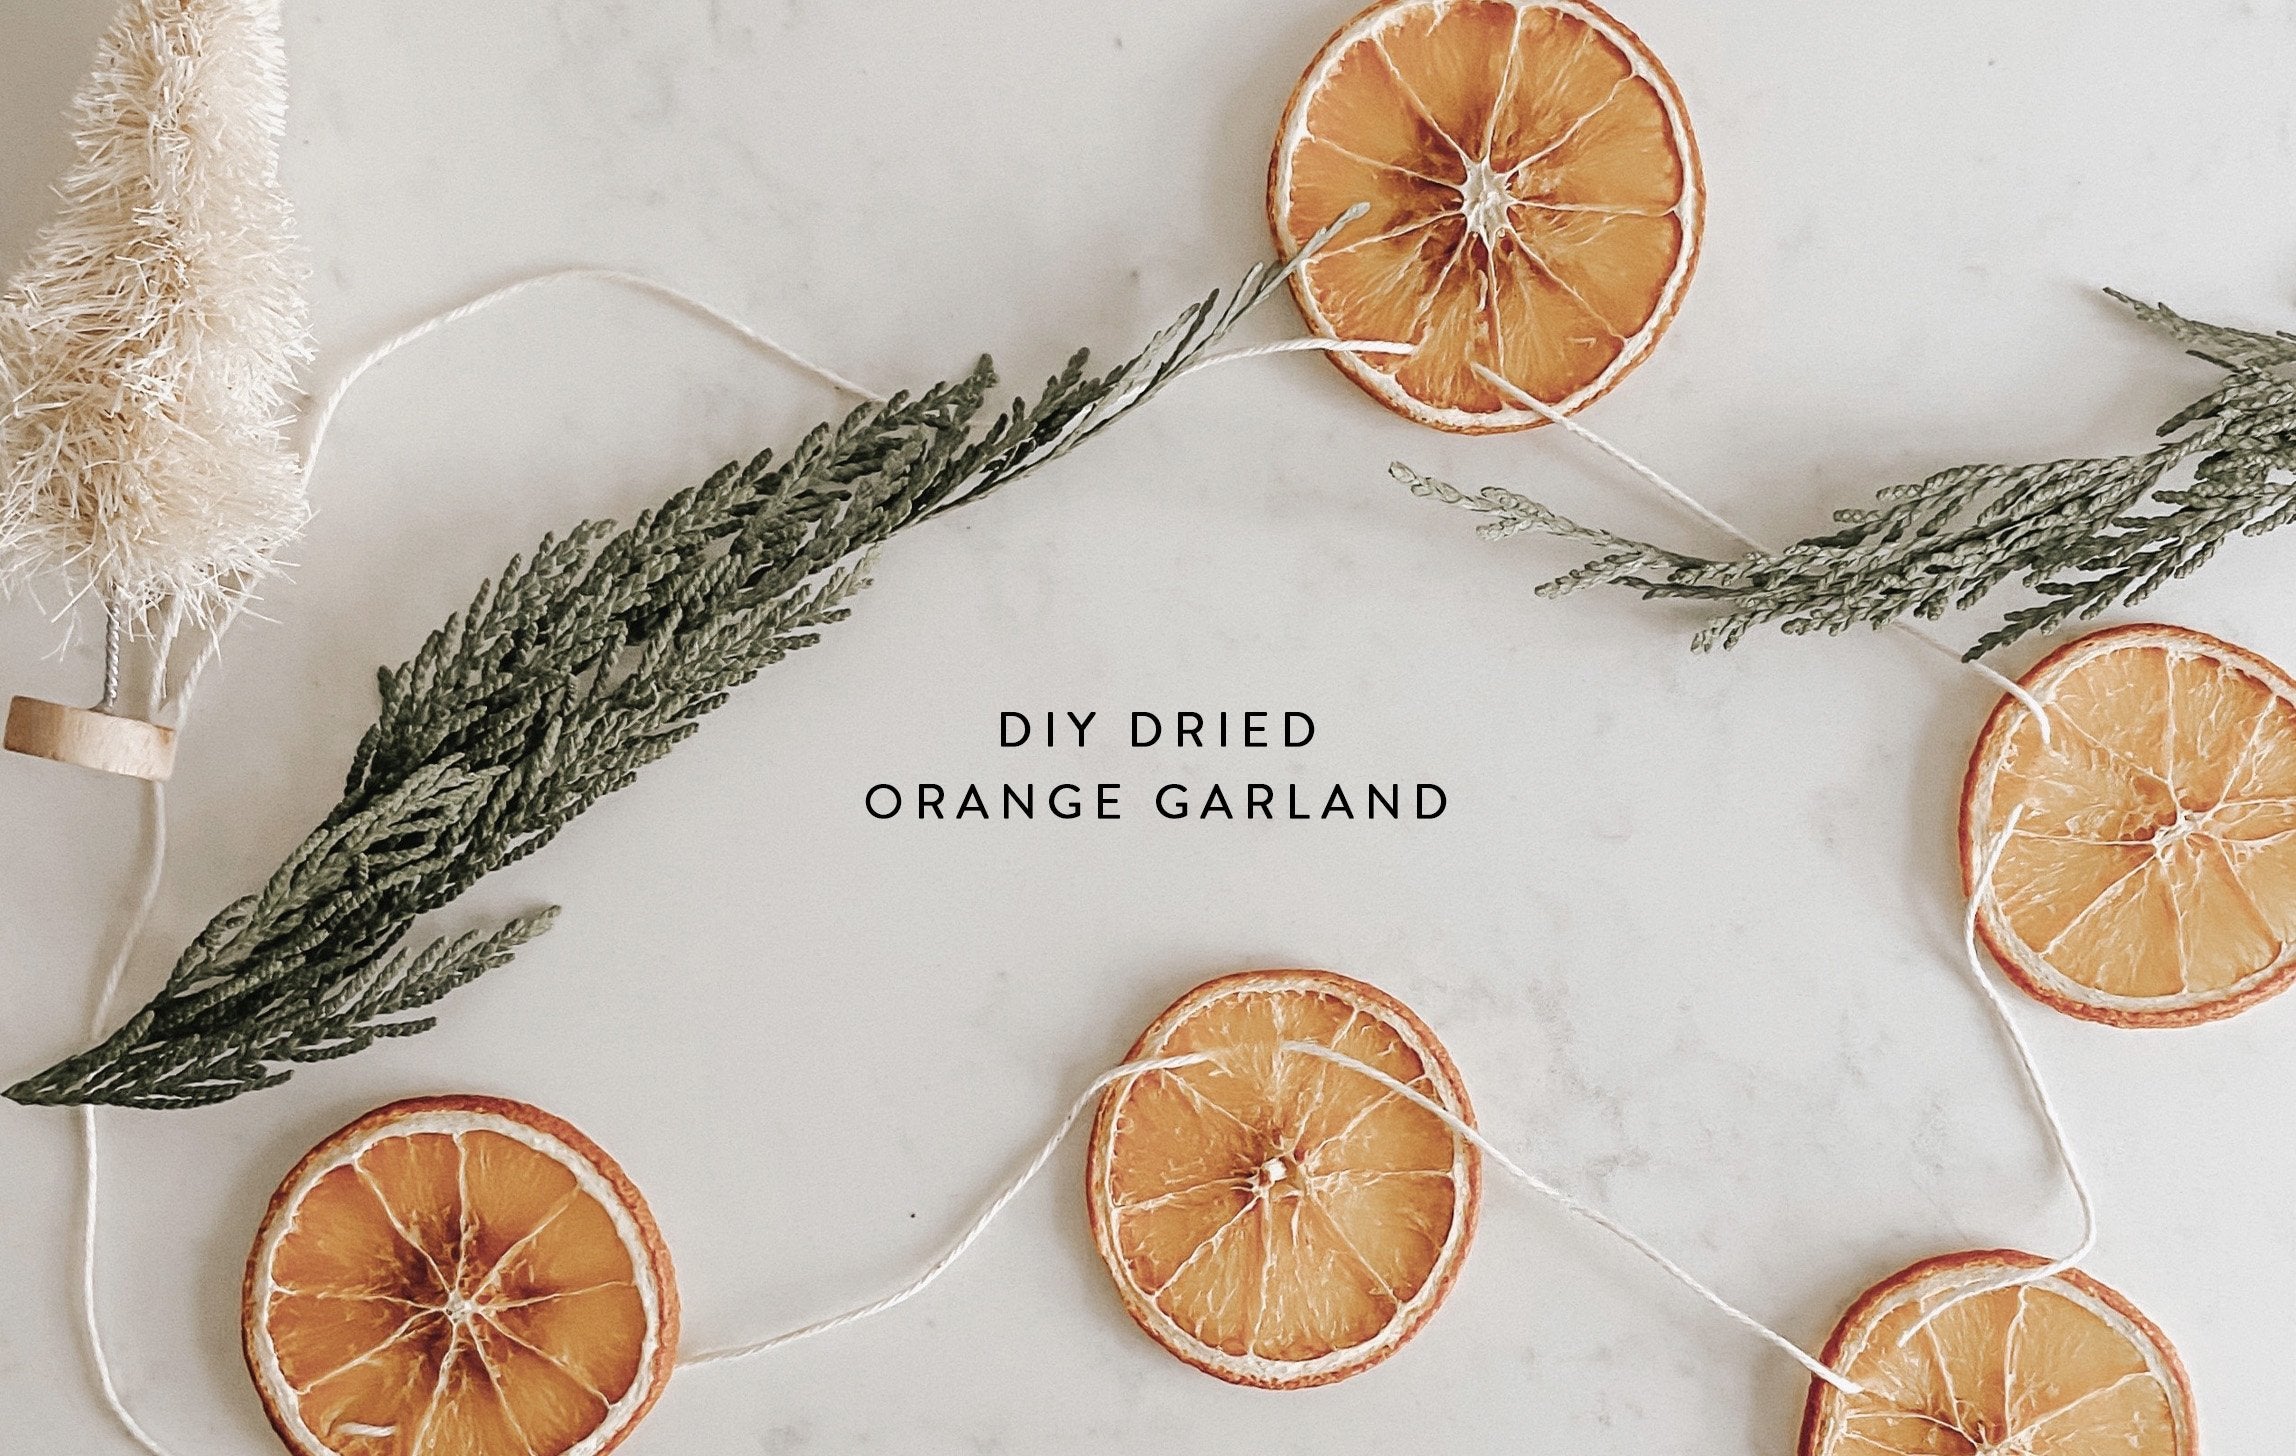 DIY: Holiday Dried Orange Garland